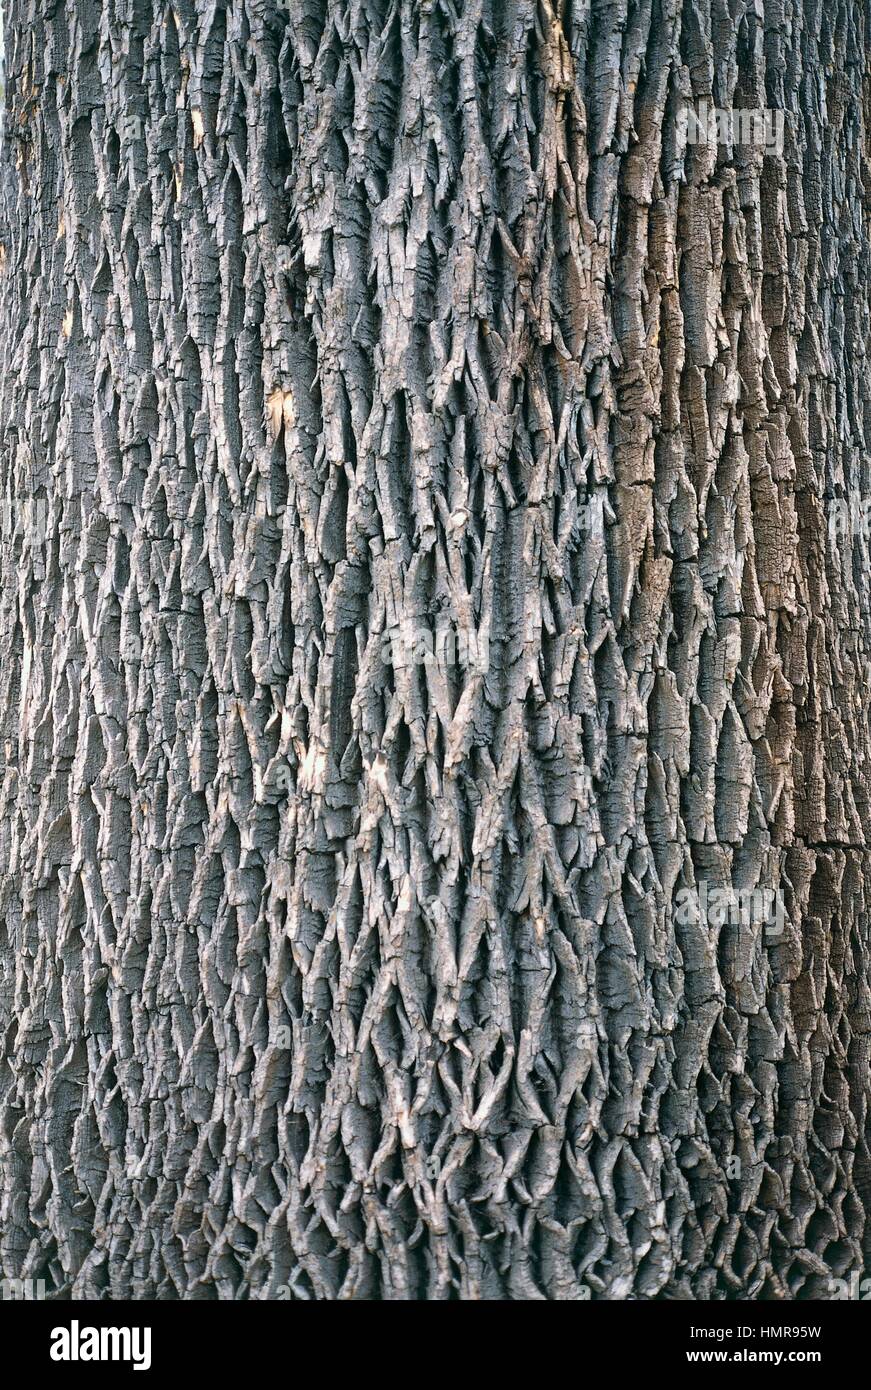 White Ash or American Ash bark (Fraxinus americana), Oleaceae. Stock Photo